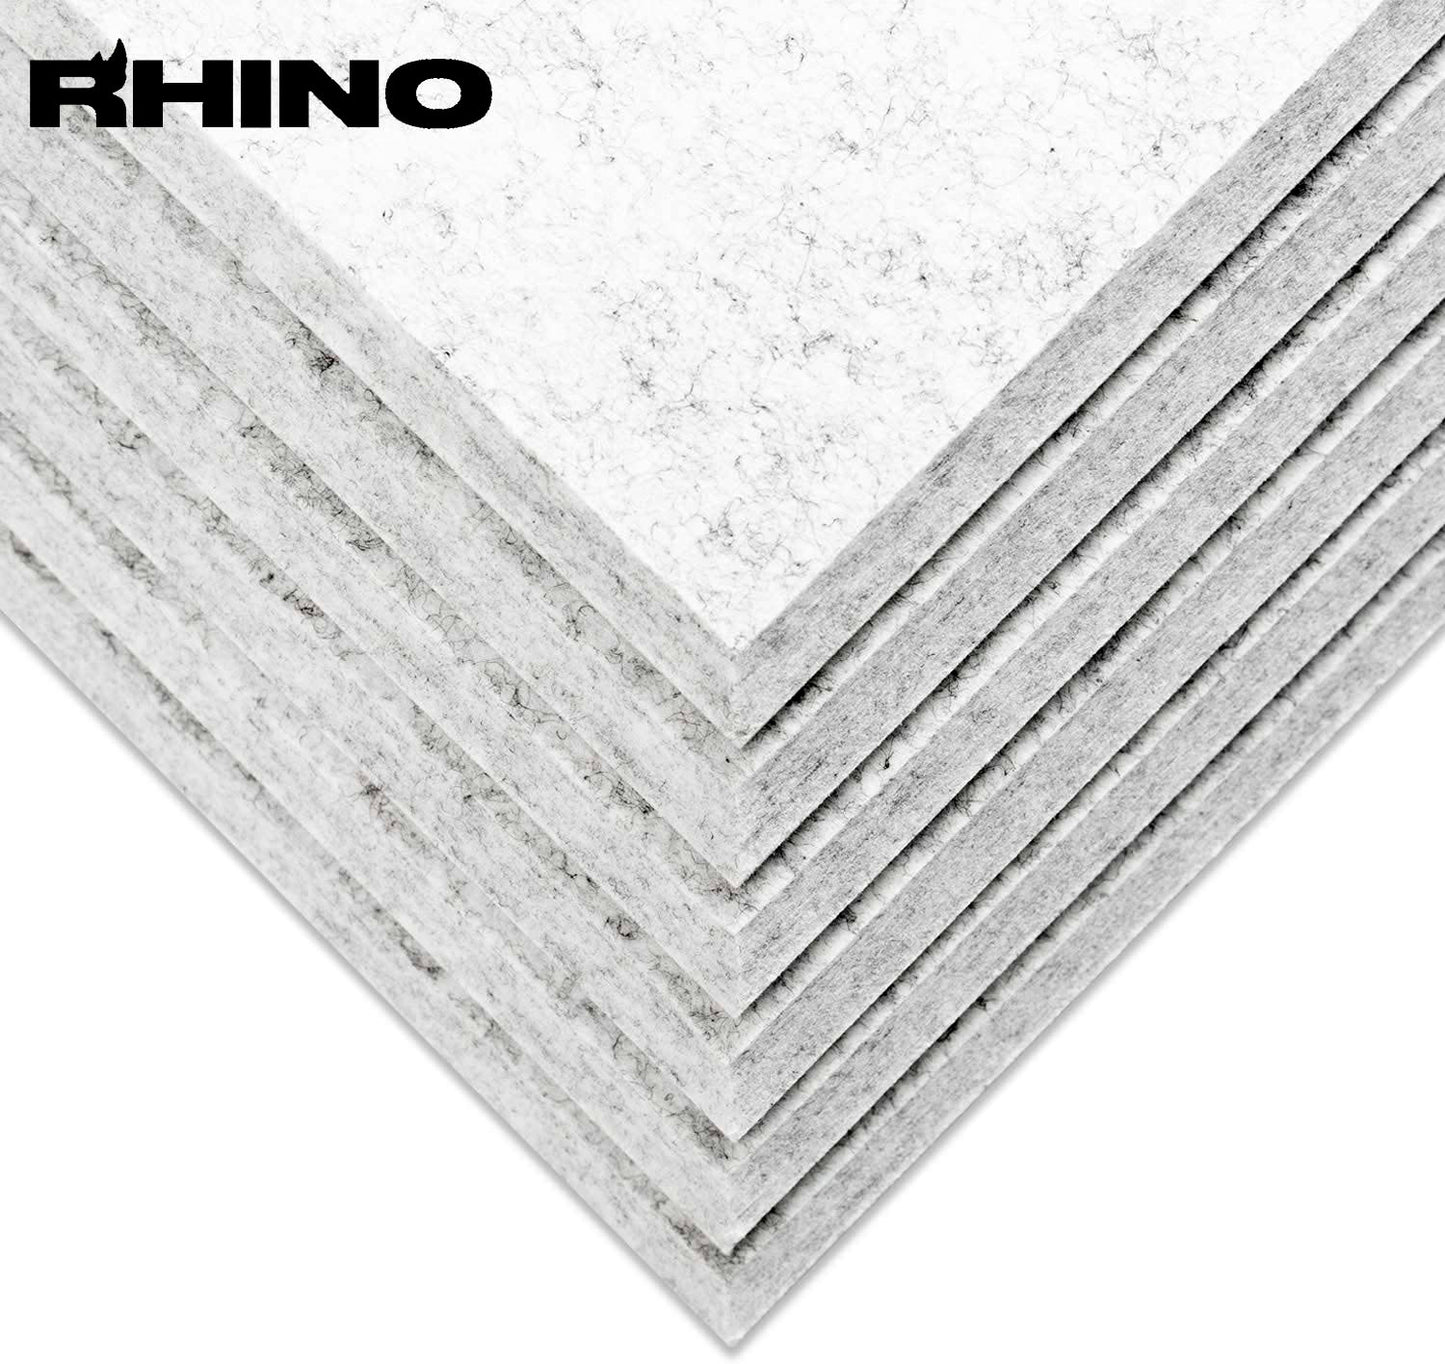 12" x 12" RHINO Acoustic Panels Silver Gray Color (6 Pcs)